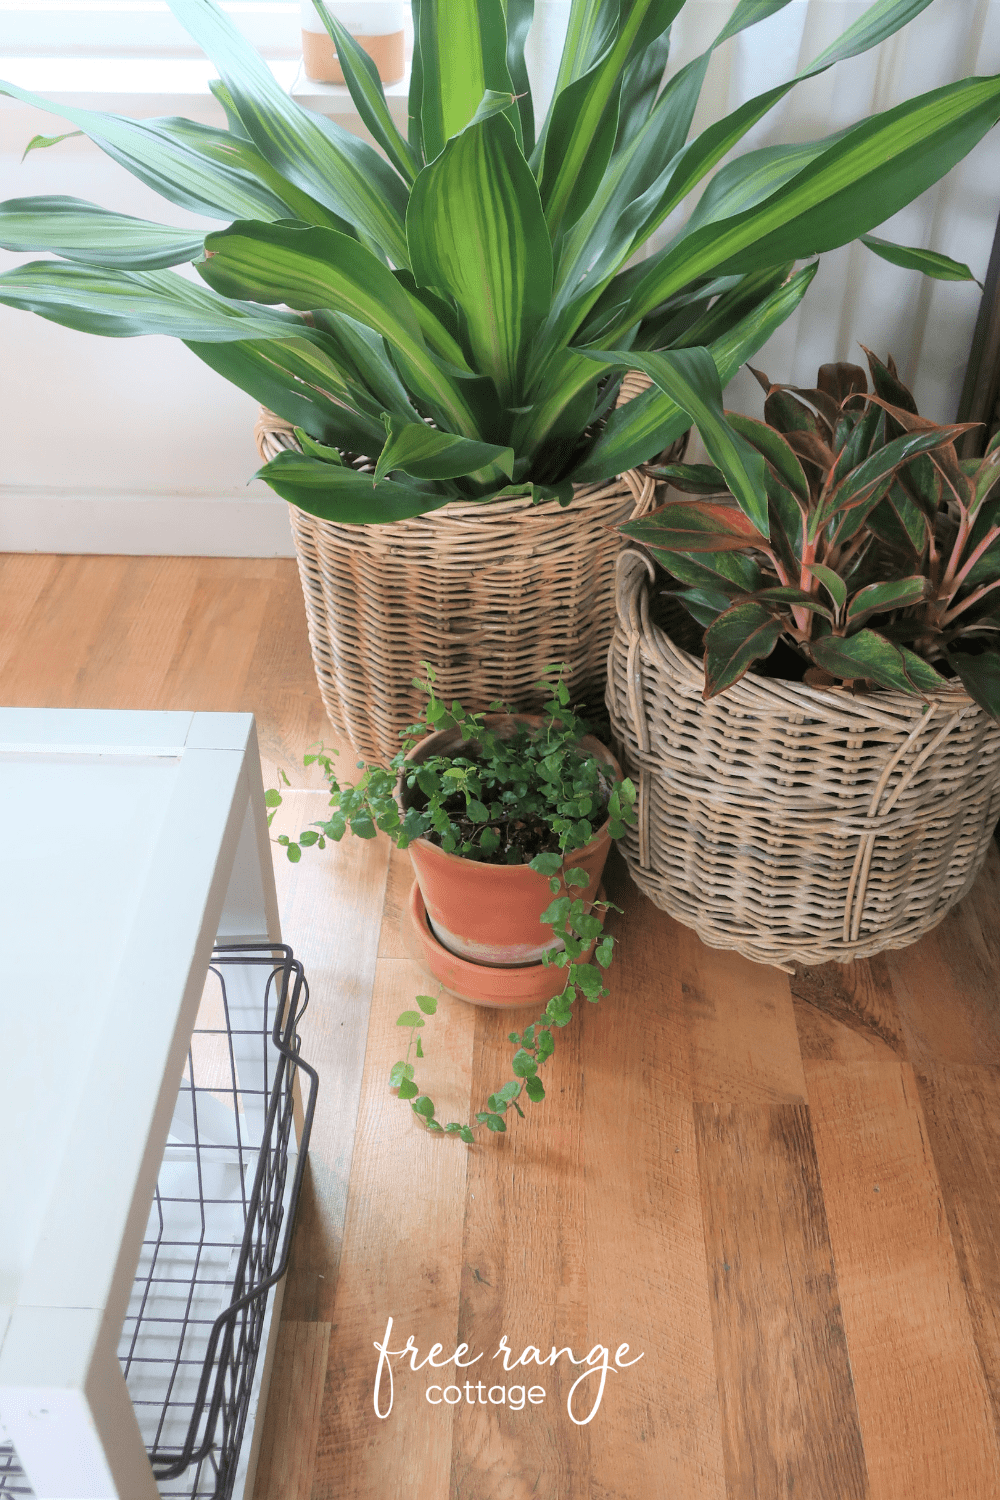 Vintage baskets holding house plants